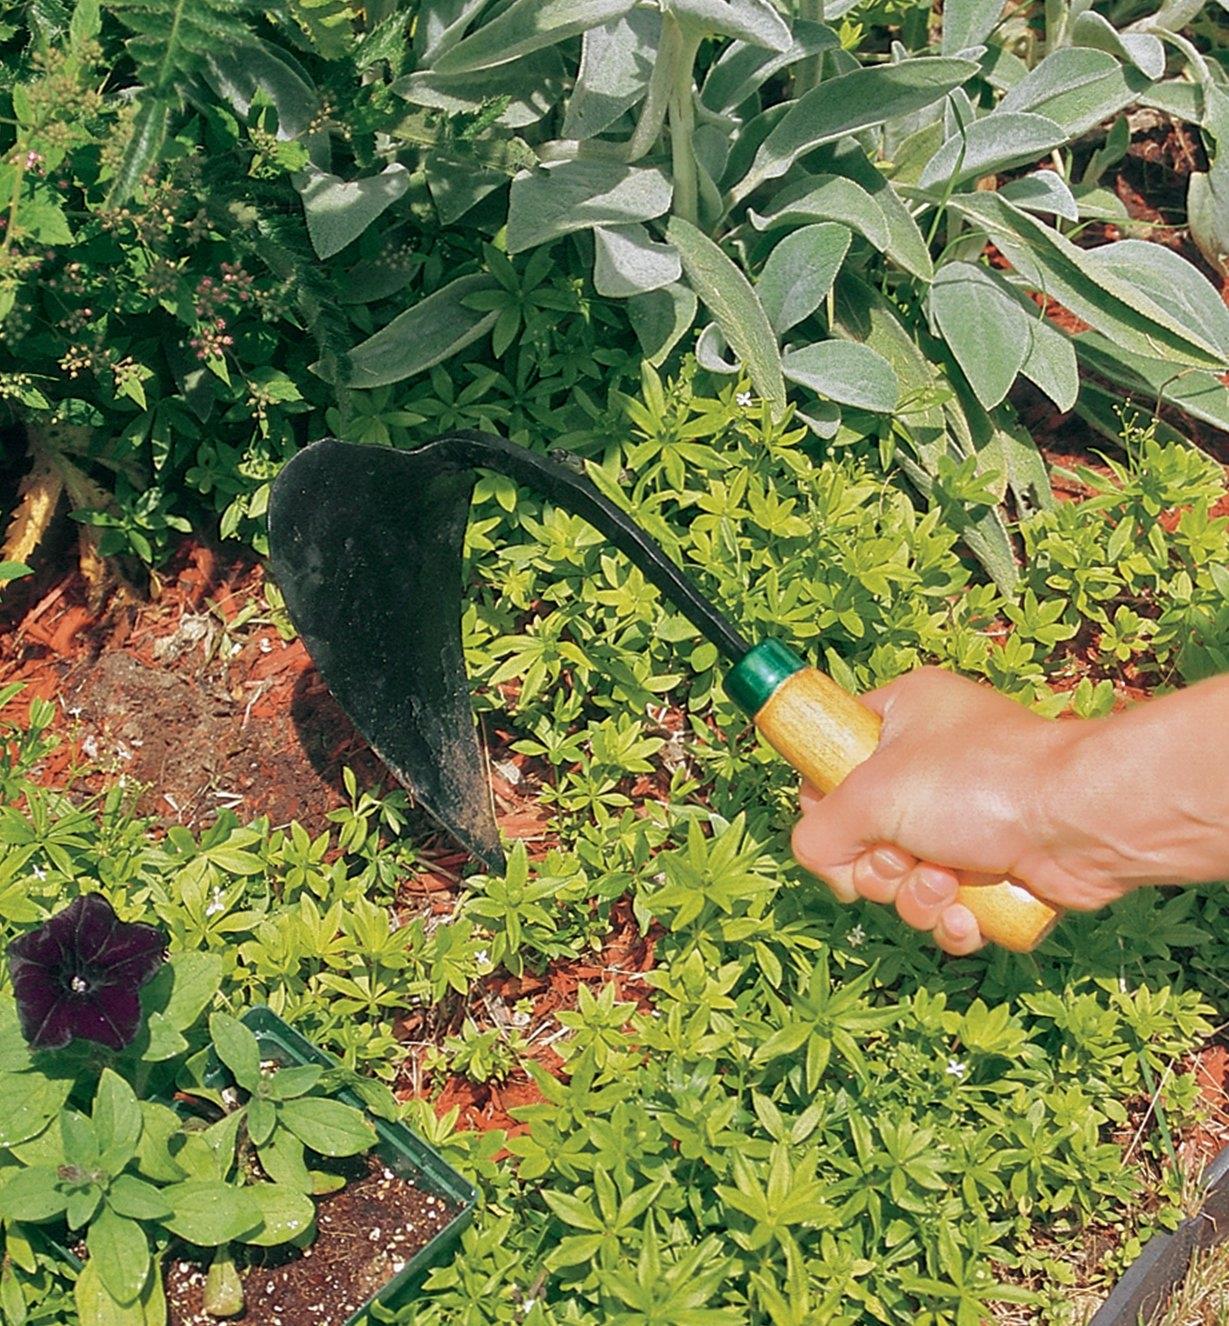 Short-Handled Ho-Mi Digger being used for weeding